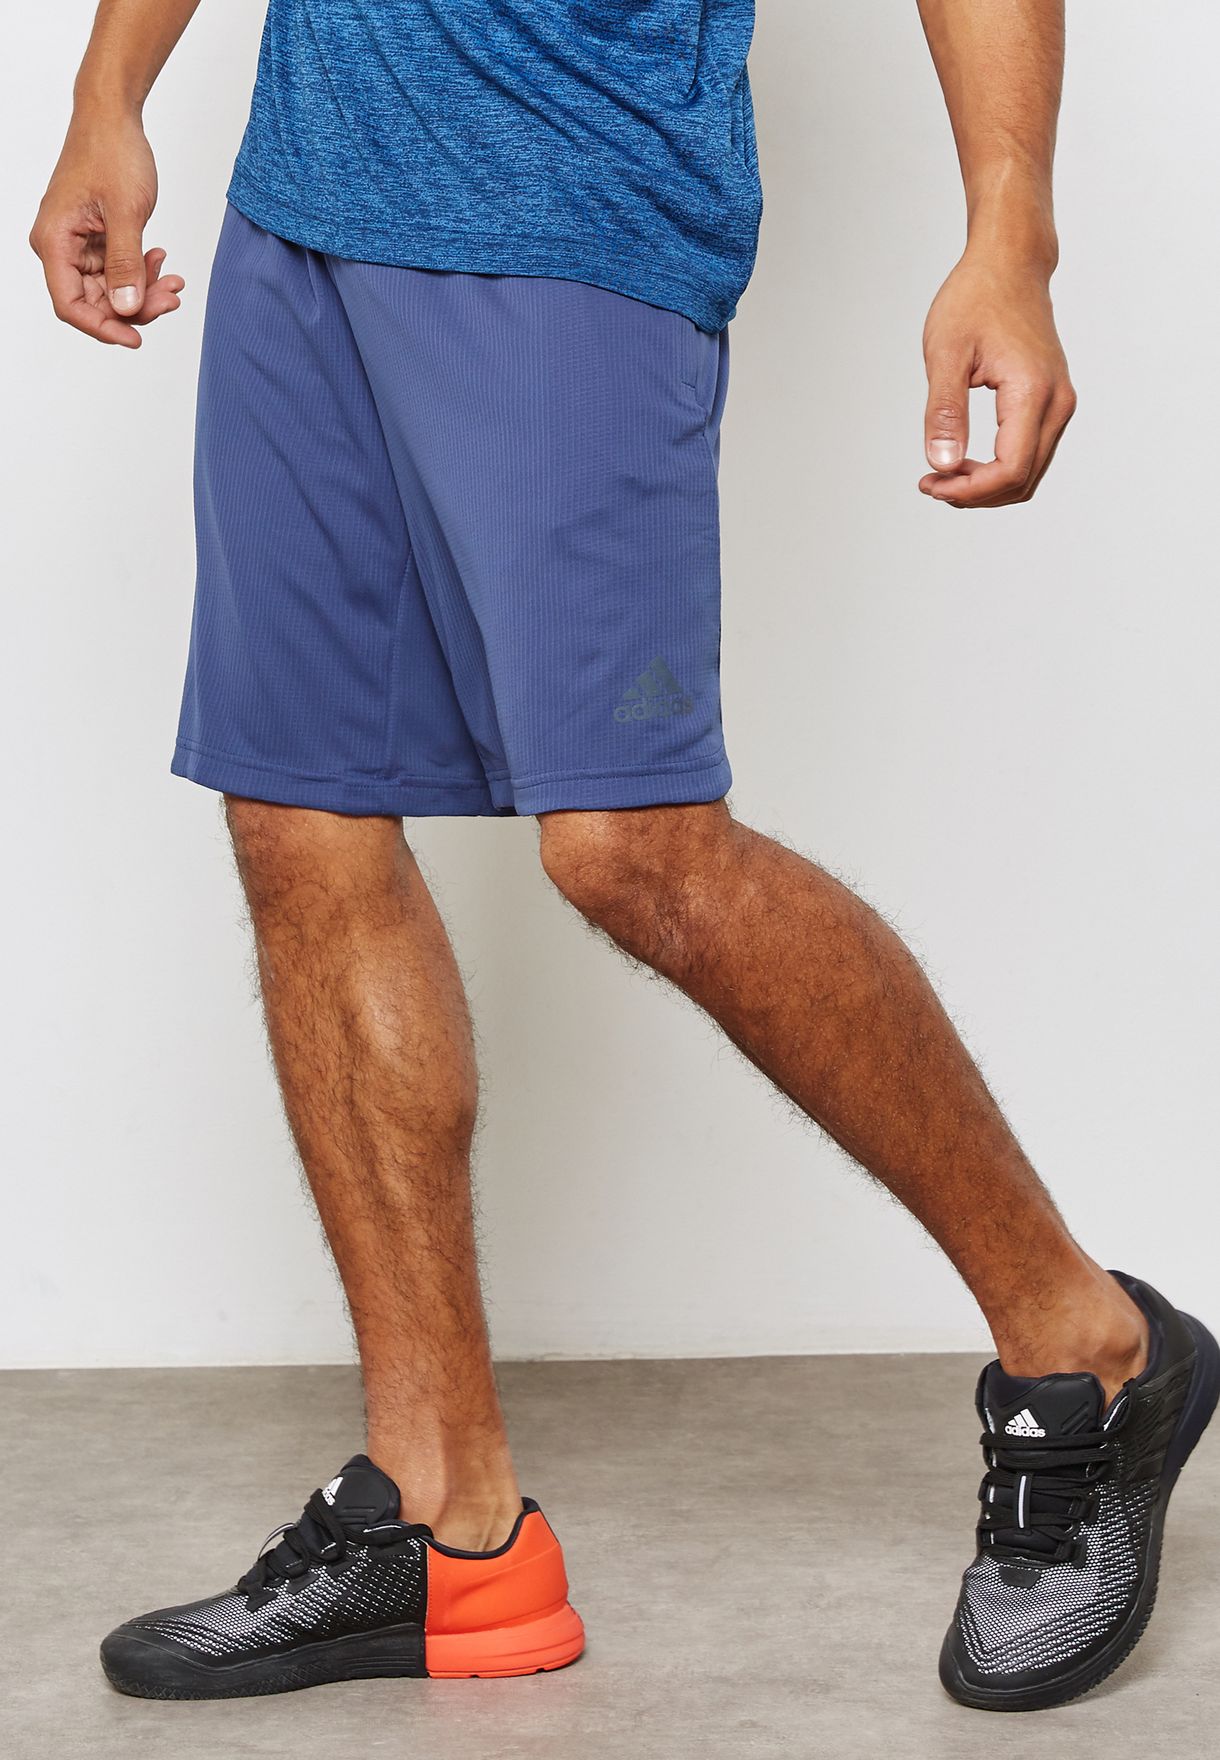 adidas 4krft climachill shorts